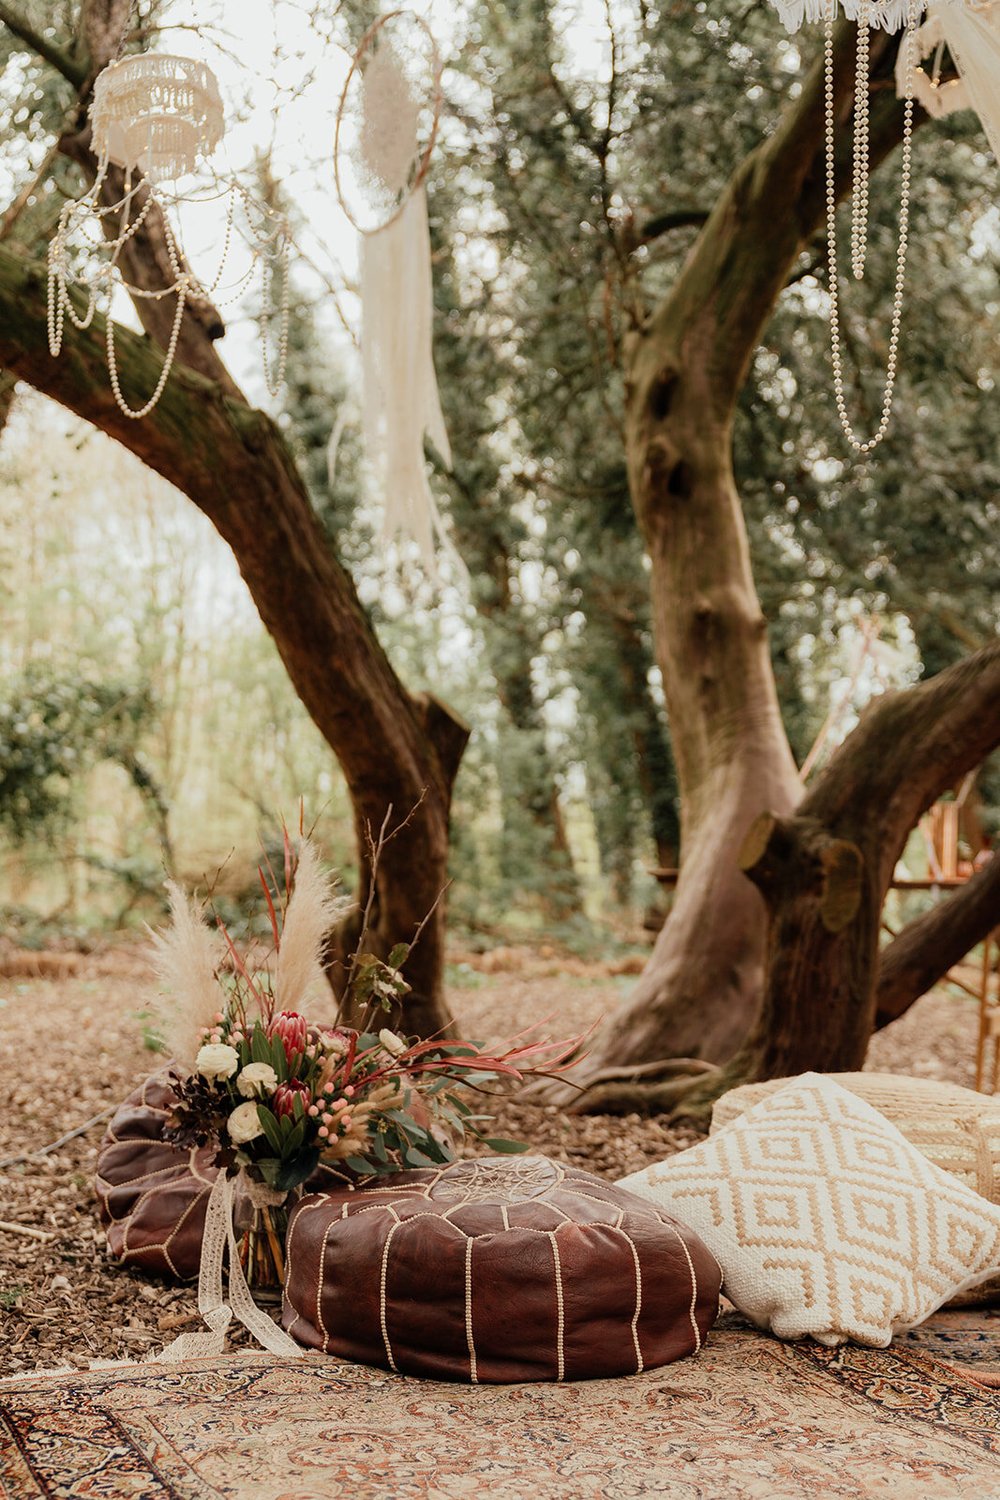 woodland outdoor seating area for wedding celebration